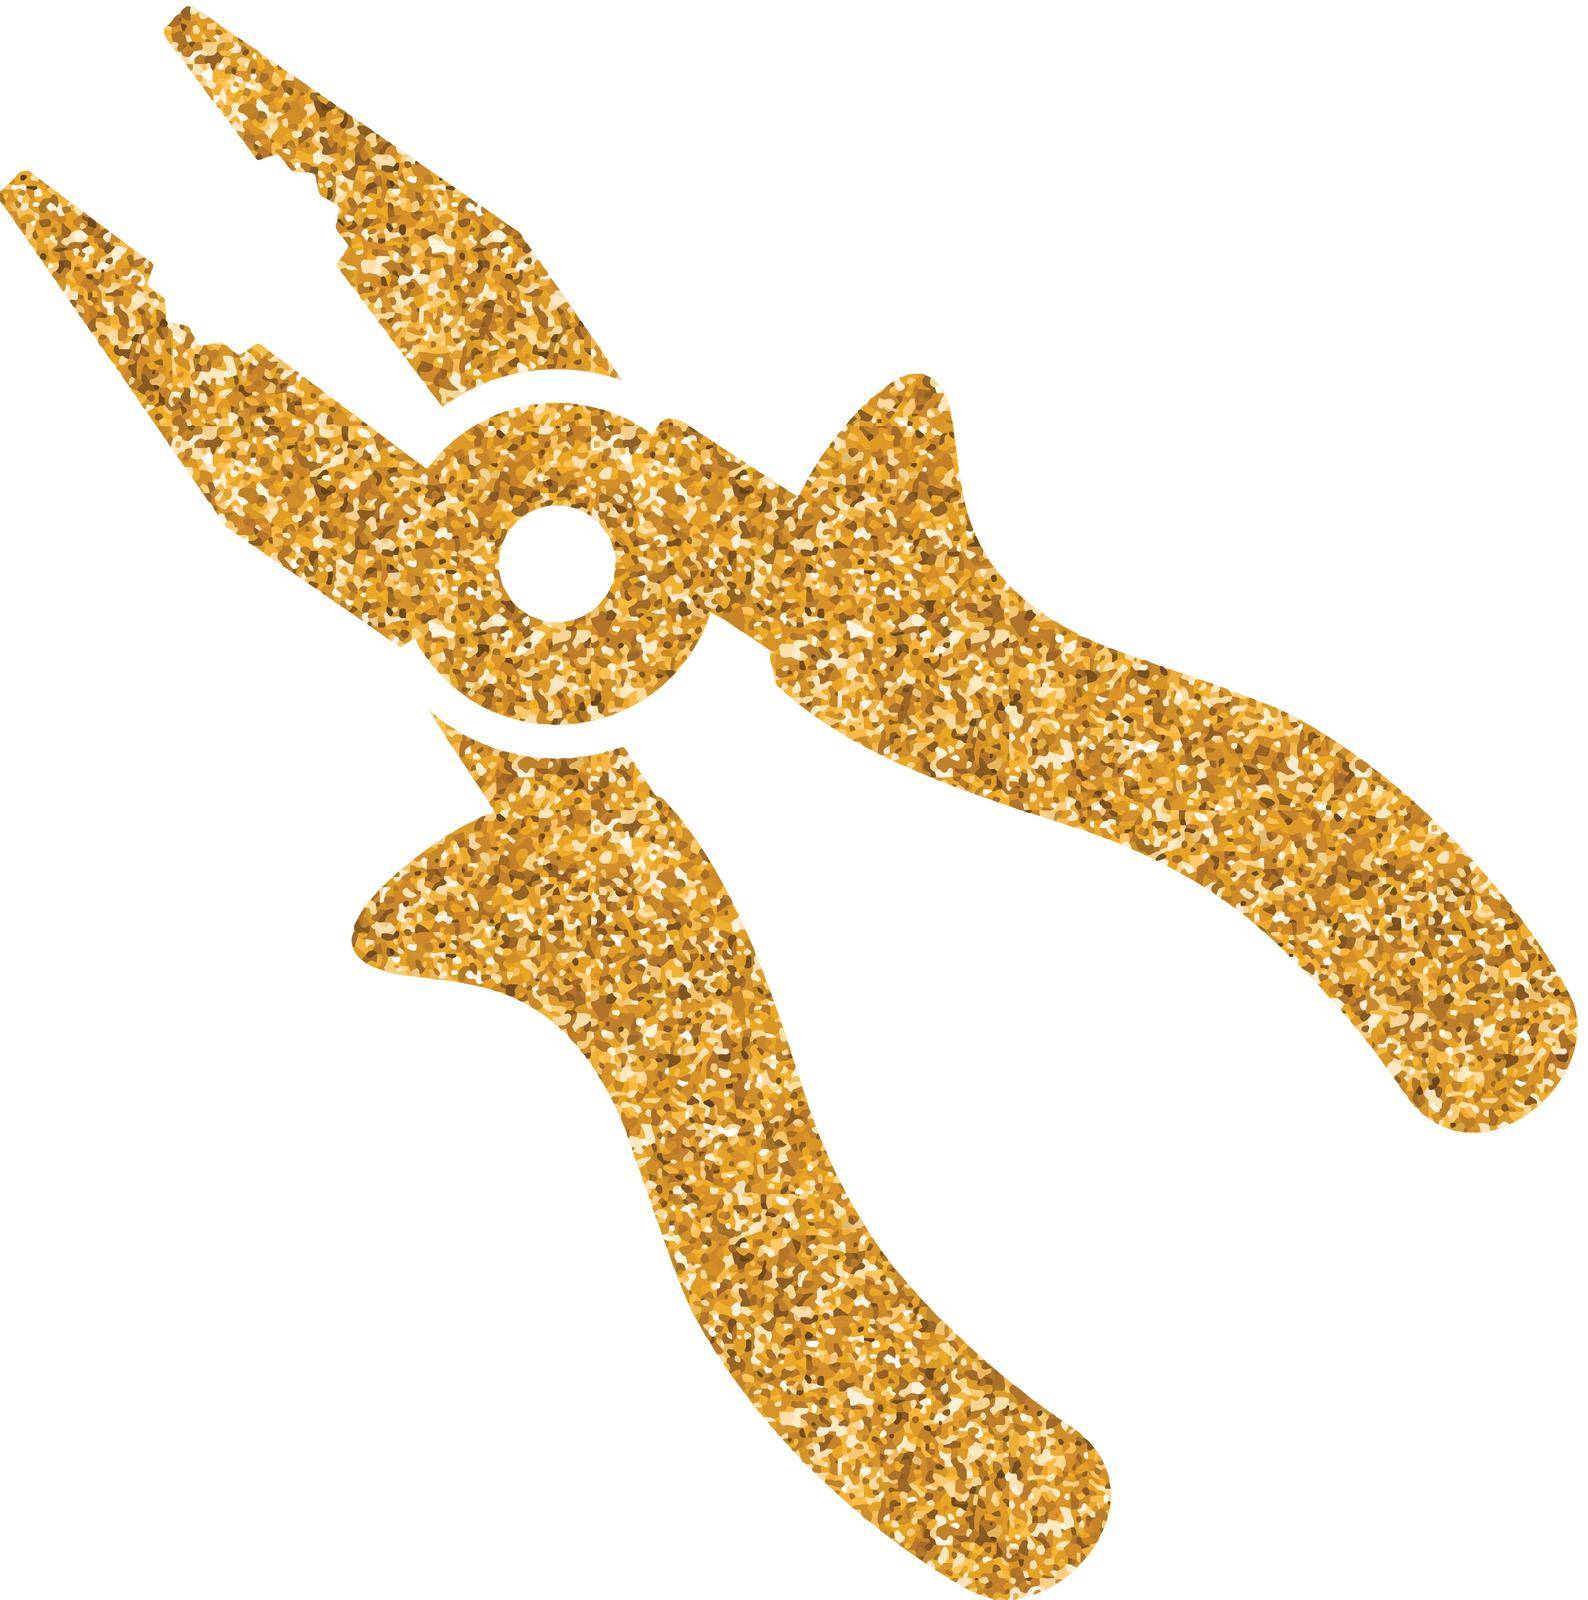 Pliers icon in gold glitter texture. Sparkle luxury style vector illustration.